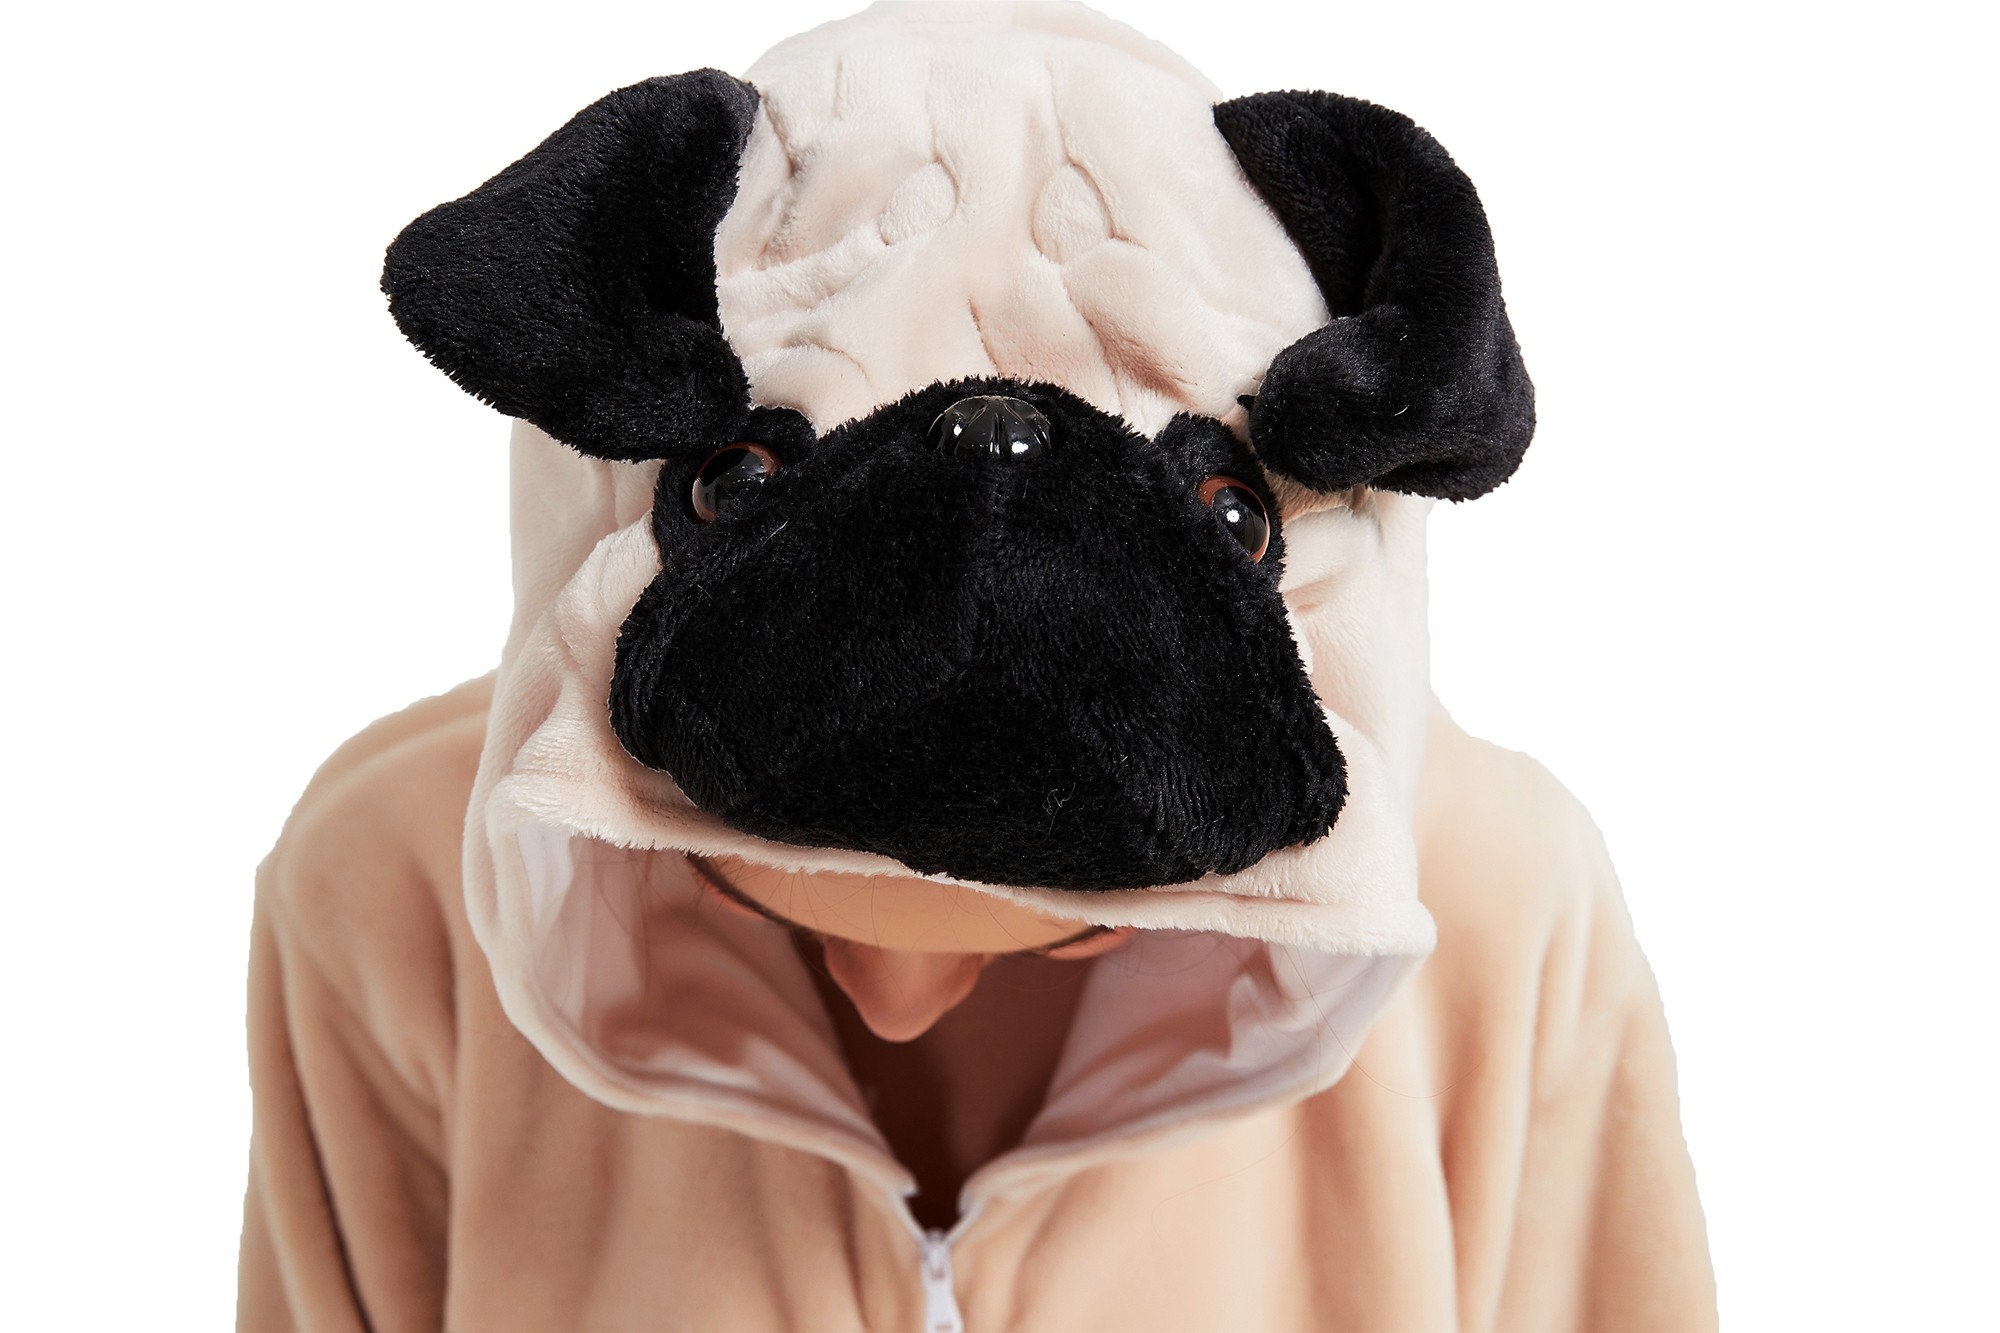 16pcs Animal Onesie Animal Pajamas Halloween Costumes Adult Shar pei Wholesale Price